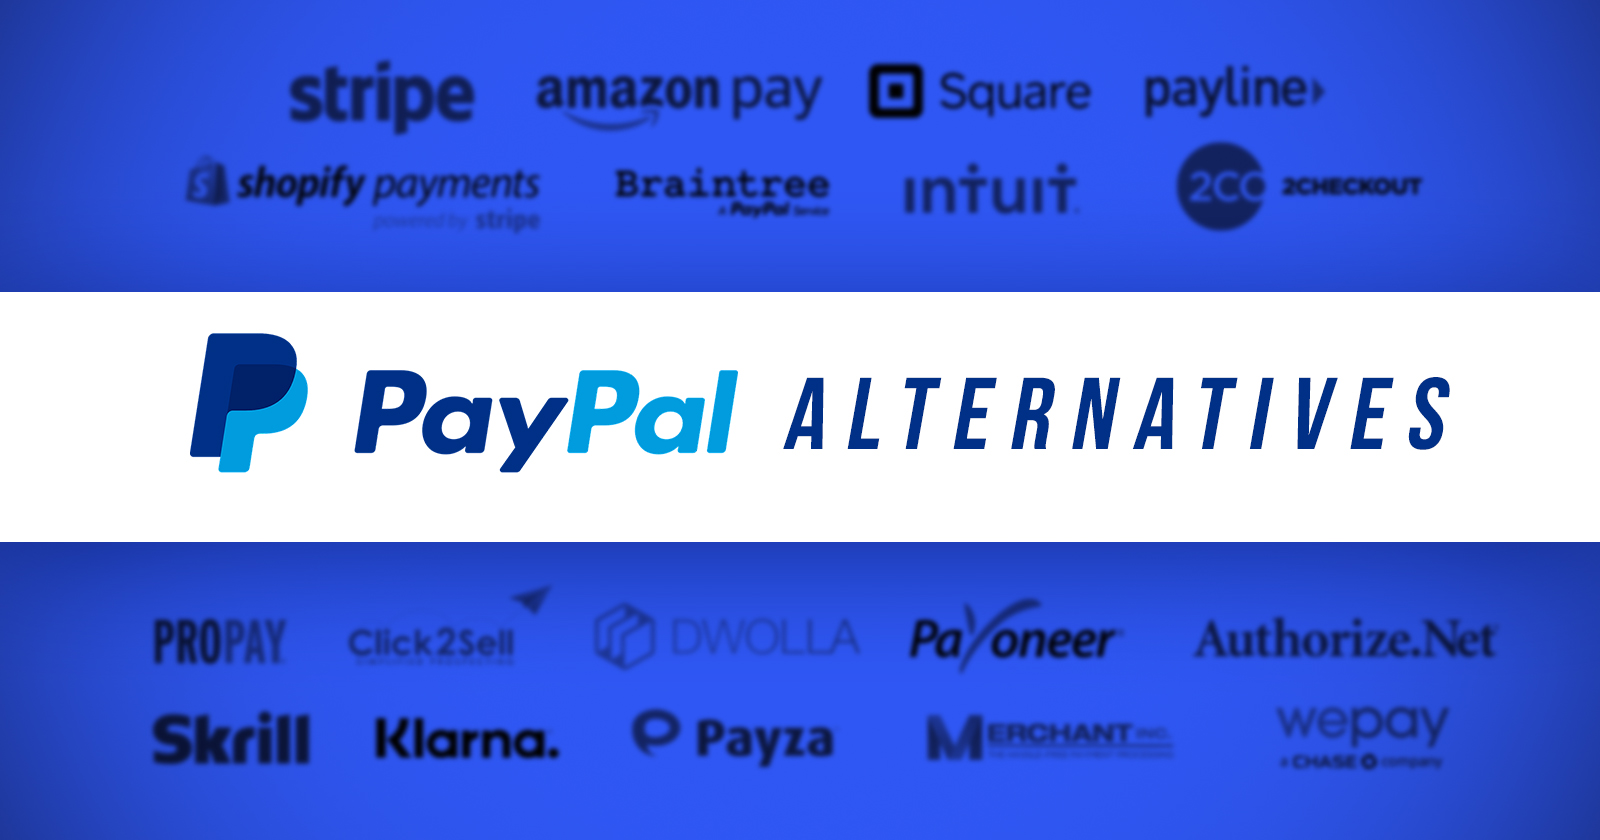 Alternative Paypal